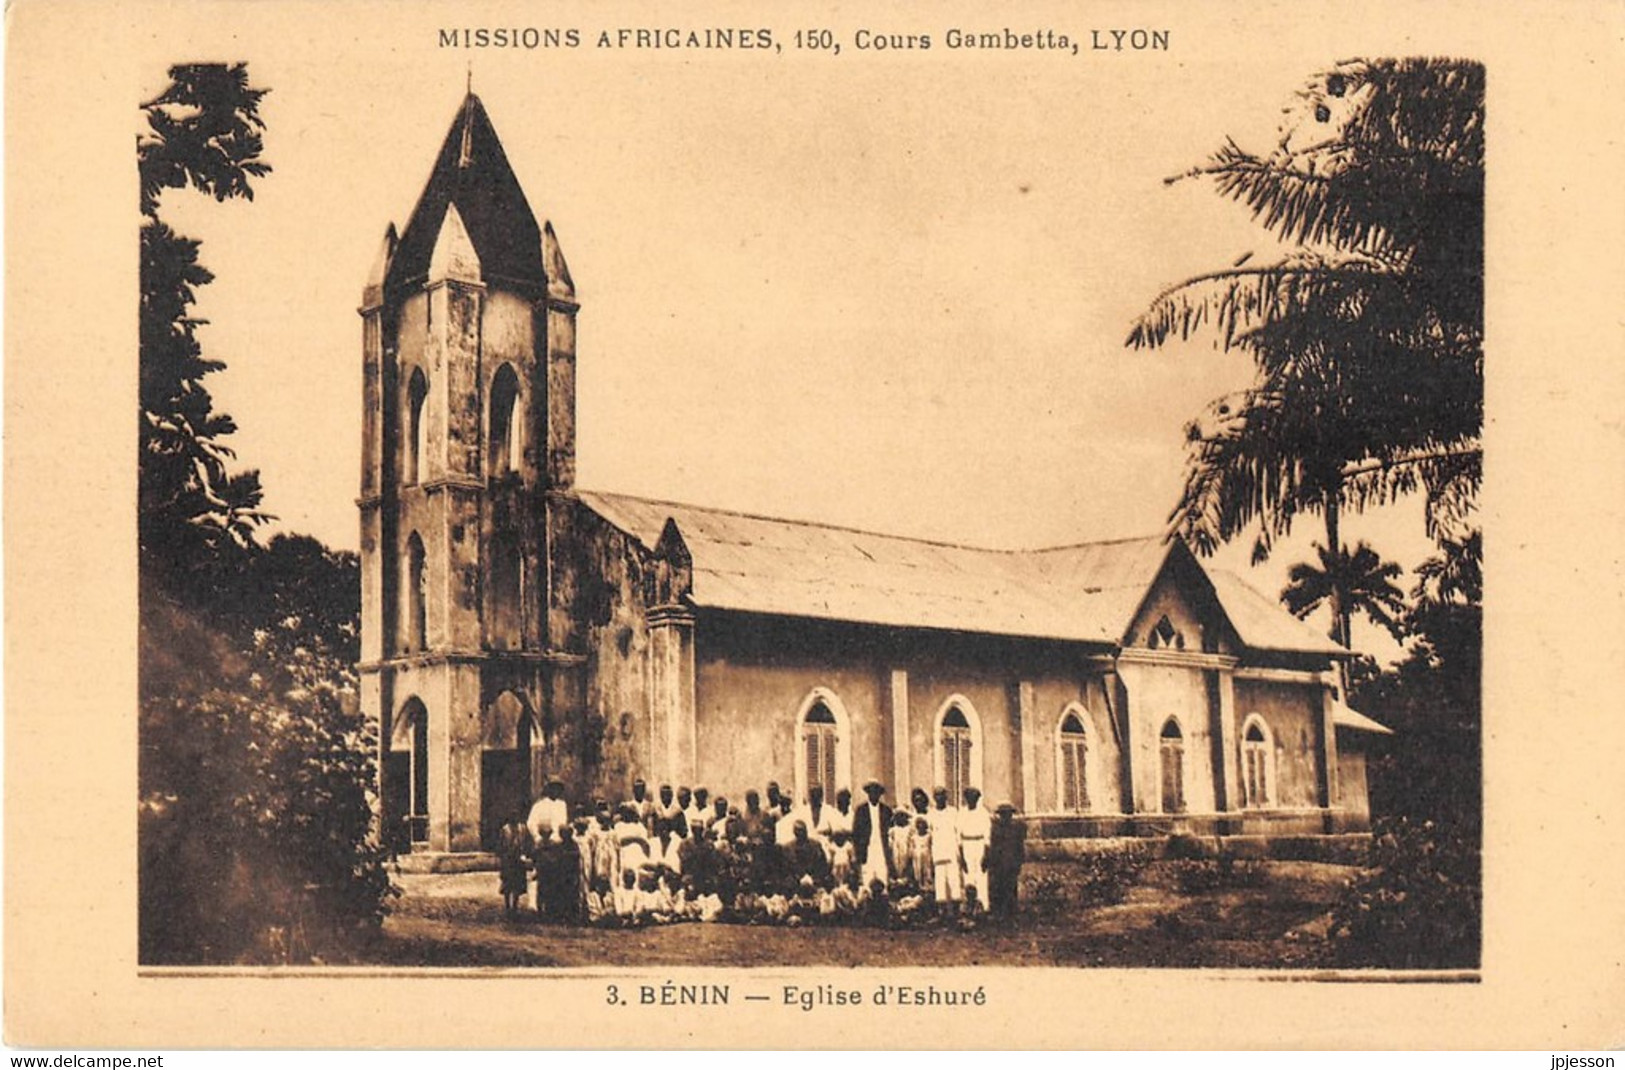 BENIN - EGLISE D'ESHURE - MISSIONS AFRICAINES, LYON - Benin